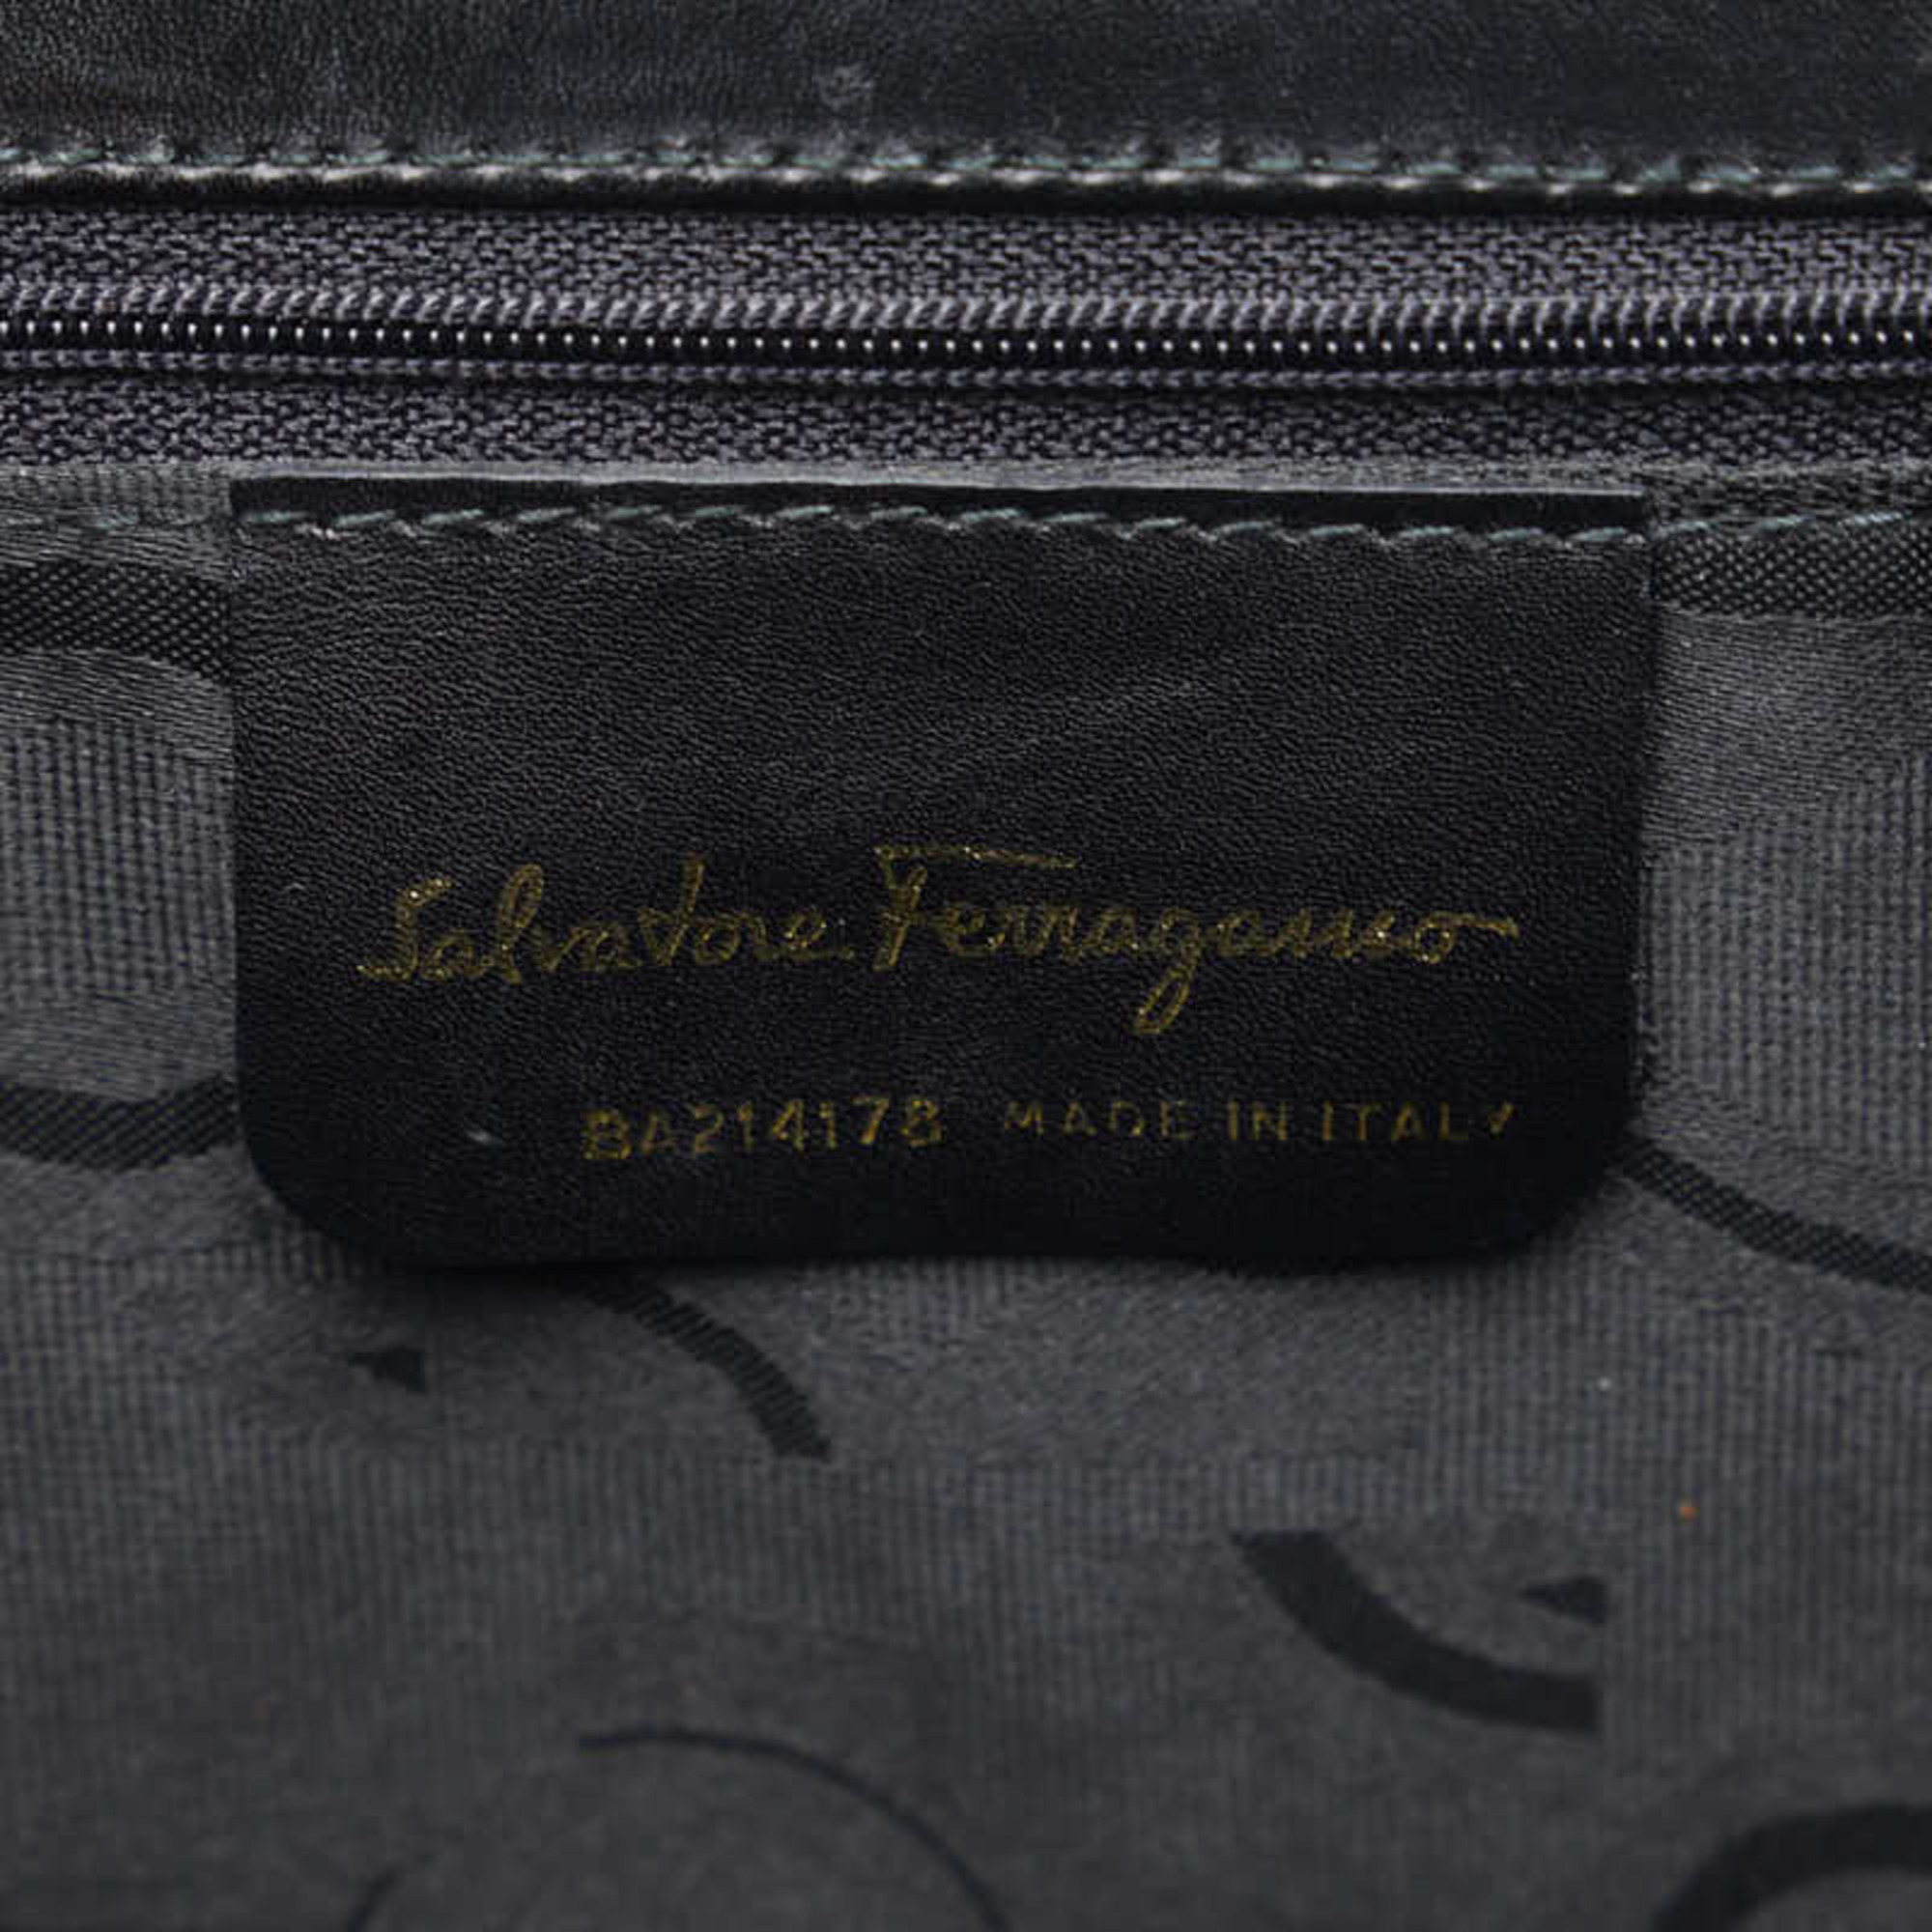 Salvatore Ferragamo Vara Ribbon Handbag Shoulder Bag BA 21 4178 Black Leather Canvas Women's